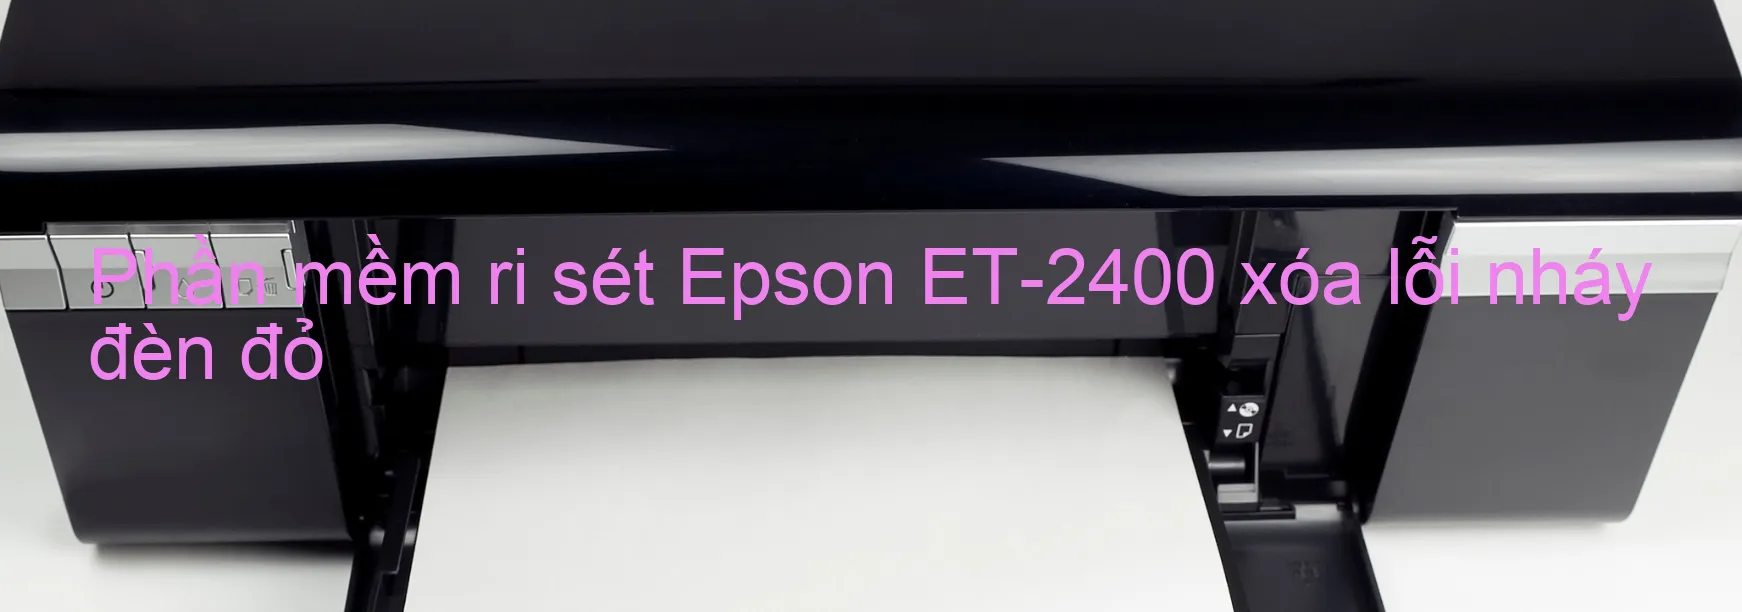 Phần mềm reset Epson ET-2400 xóa lỗi nháy đèn đỏ